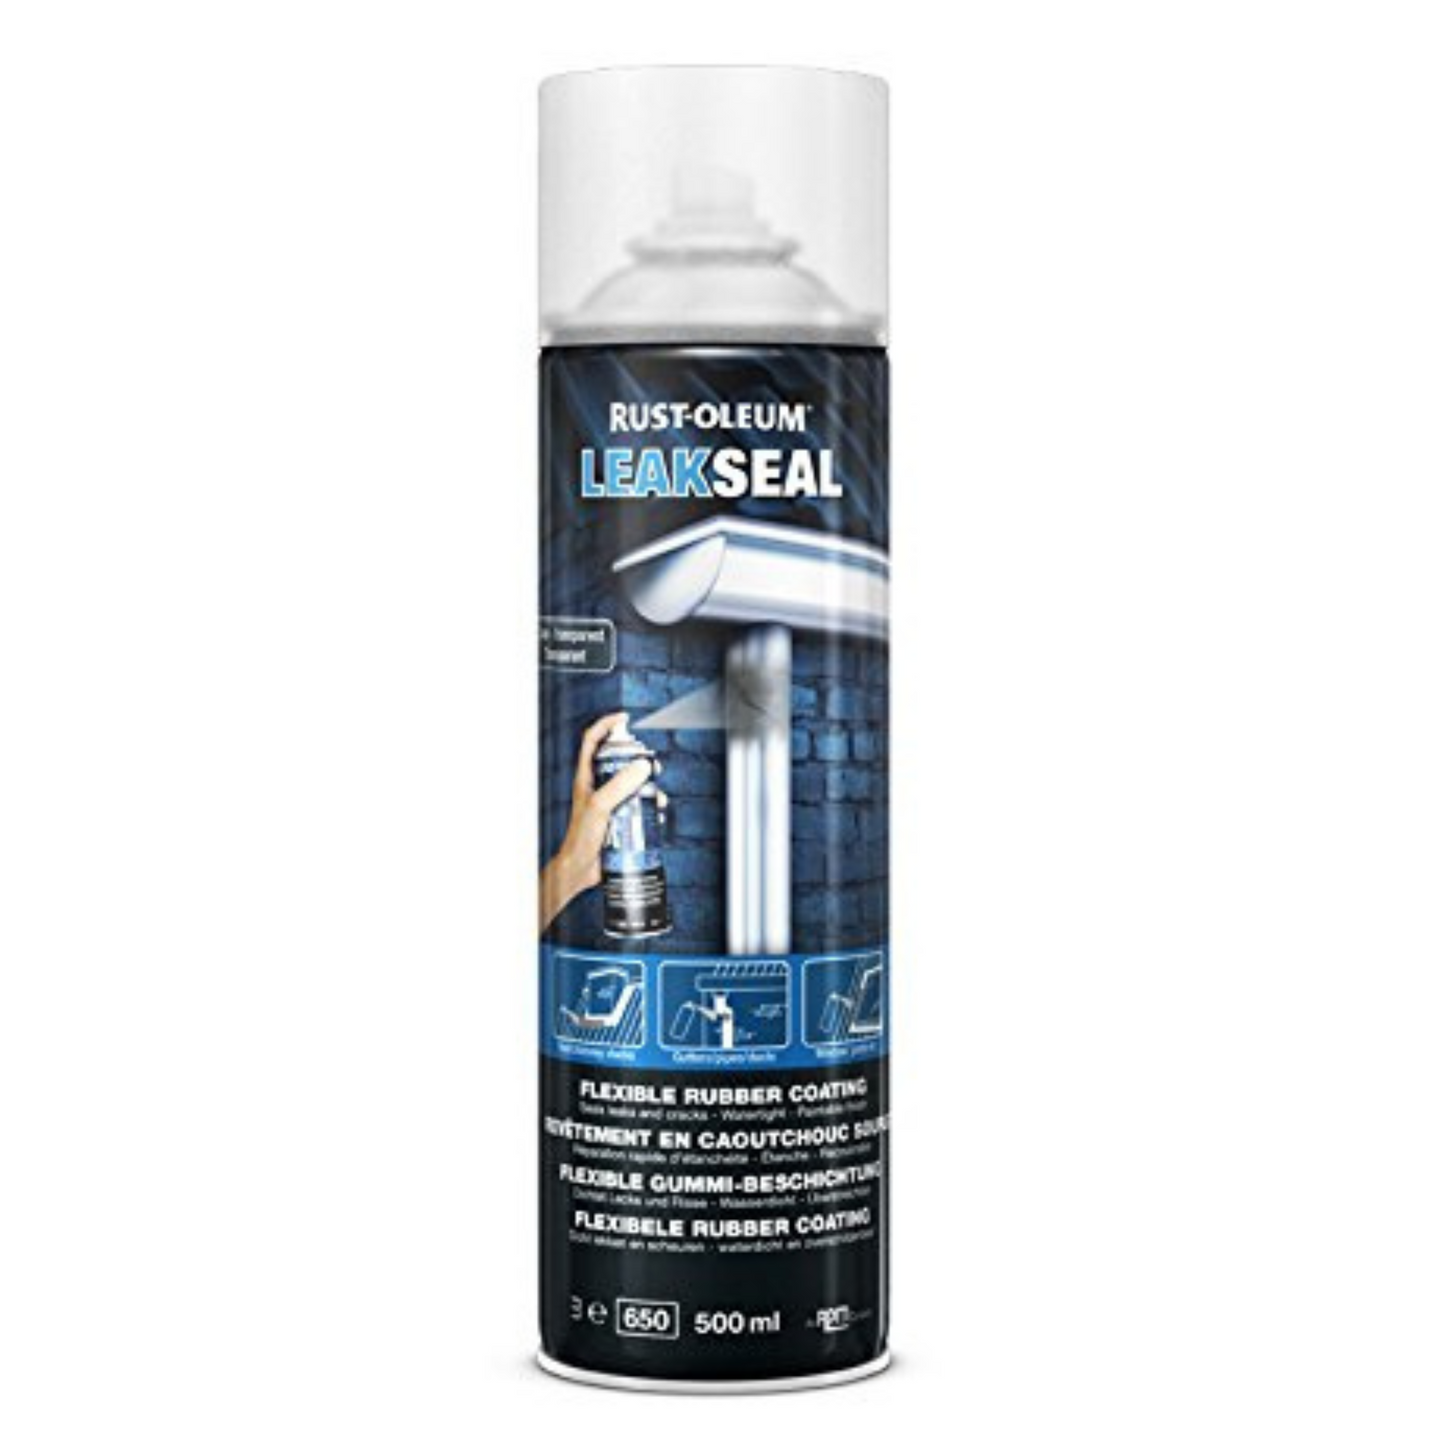 Rustoleum leak seal clear